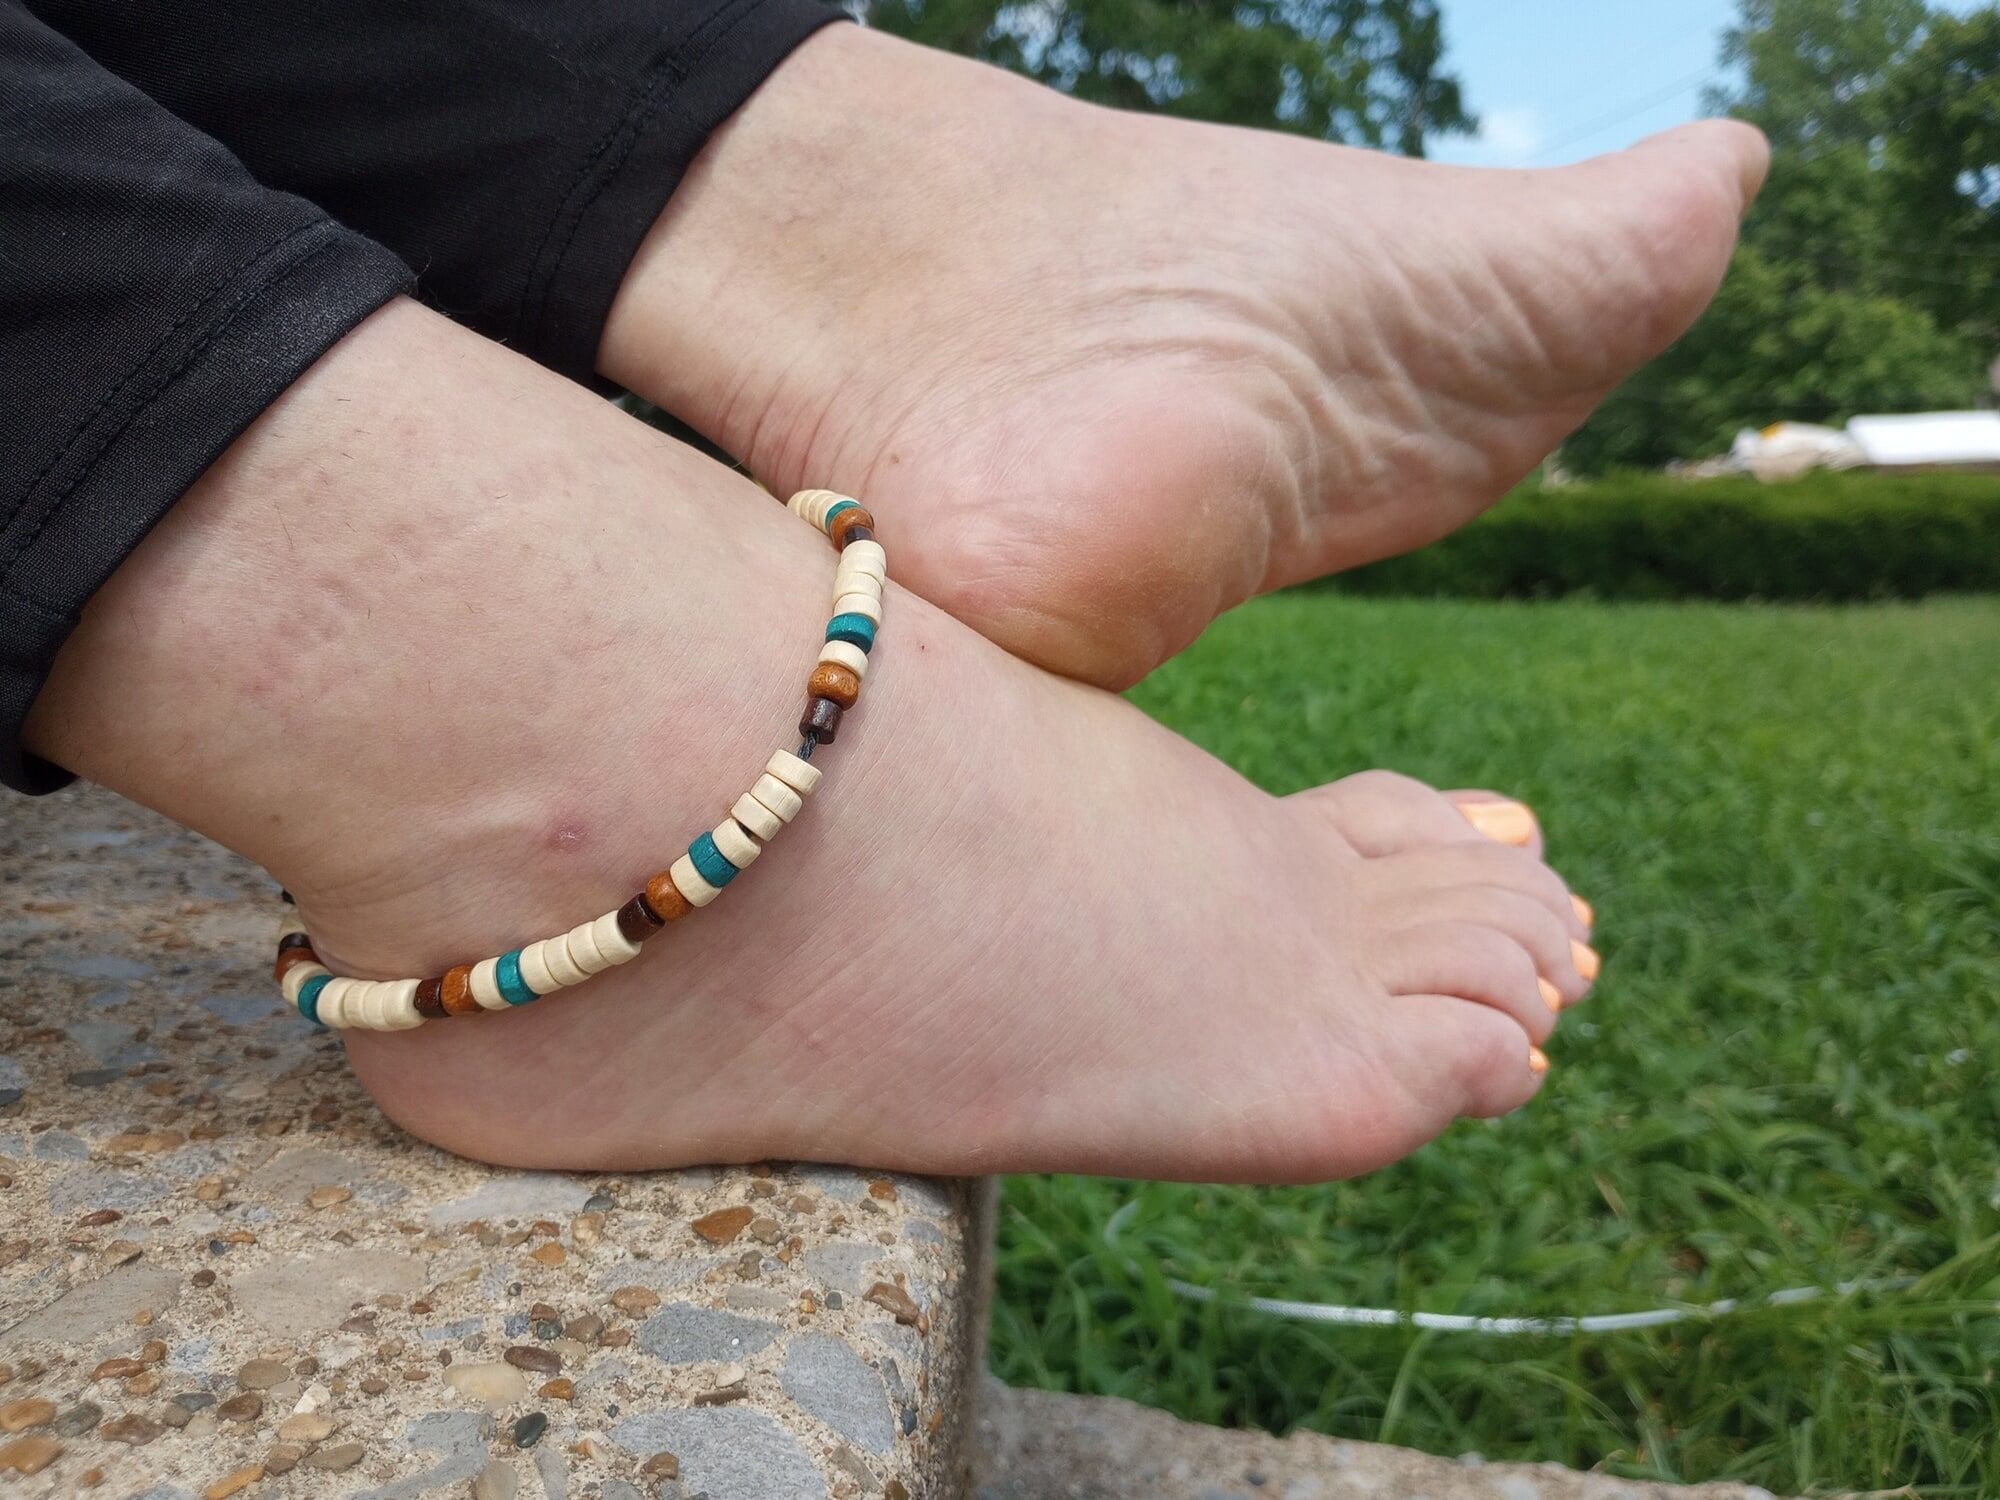 Showing Off Her Anklet 2 #15